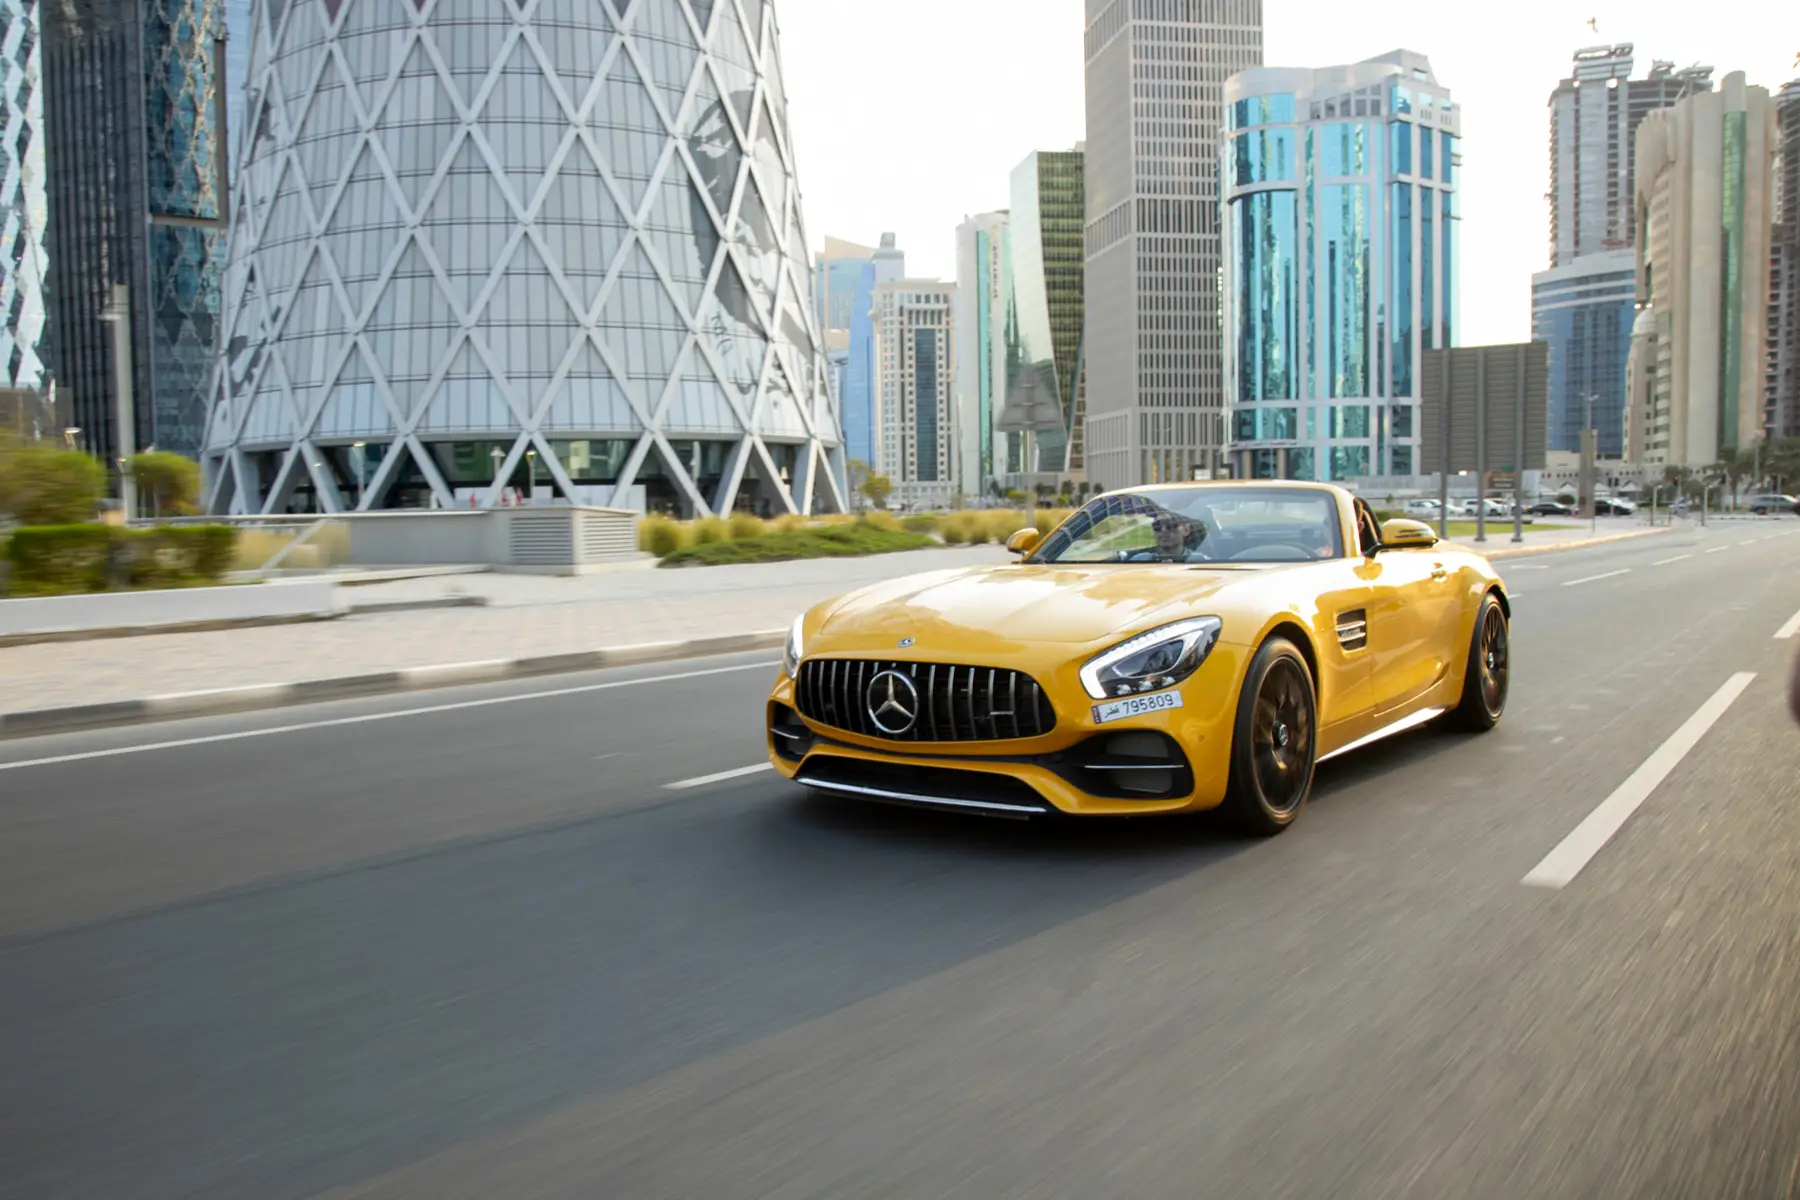 Convertible sports car in Doha